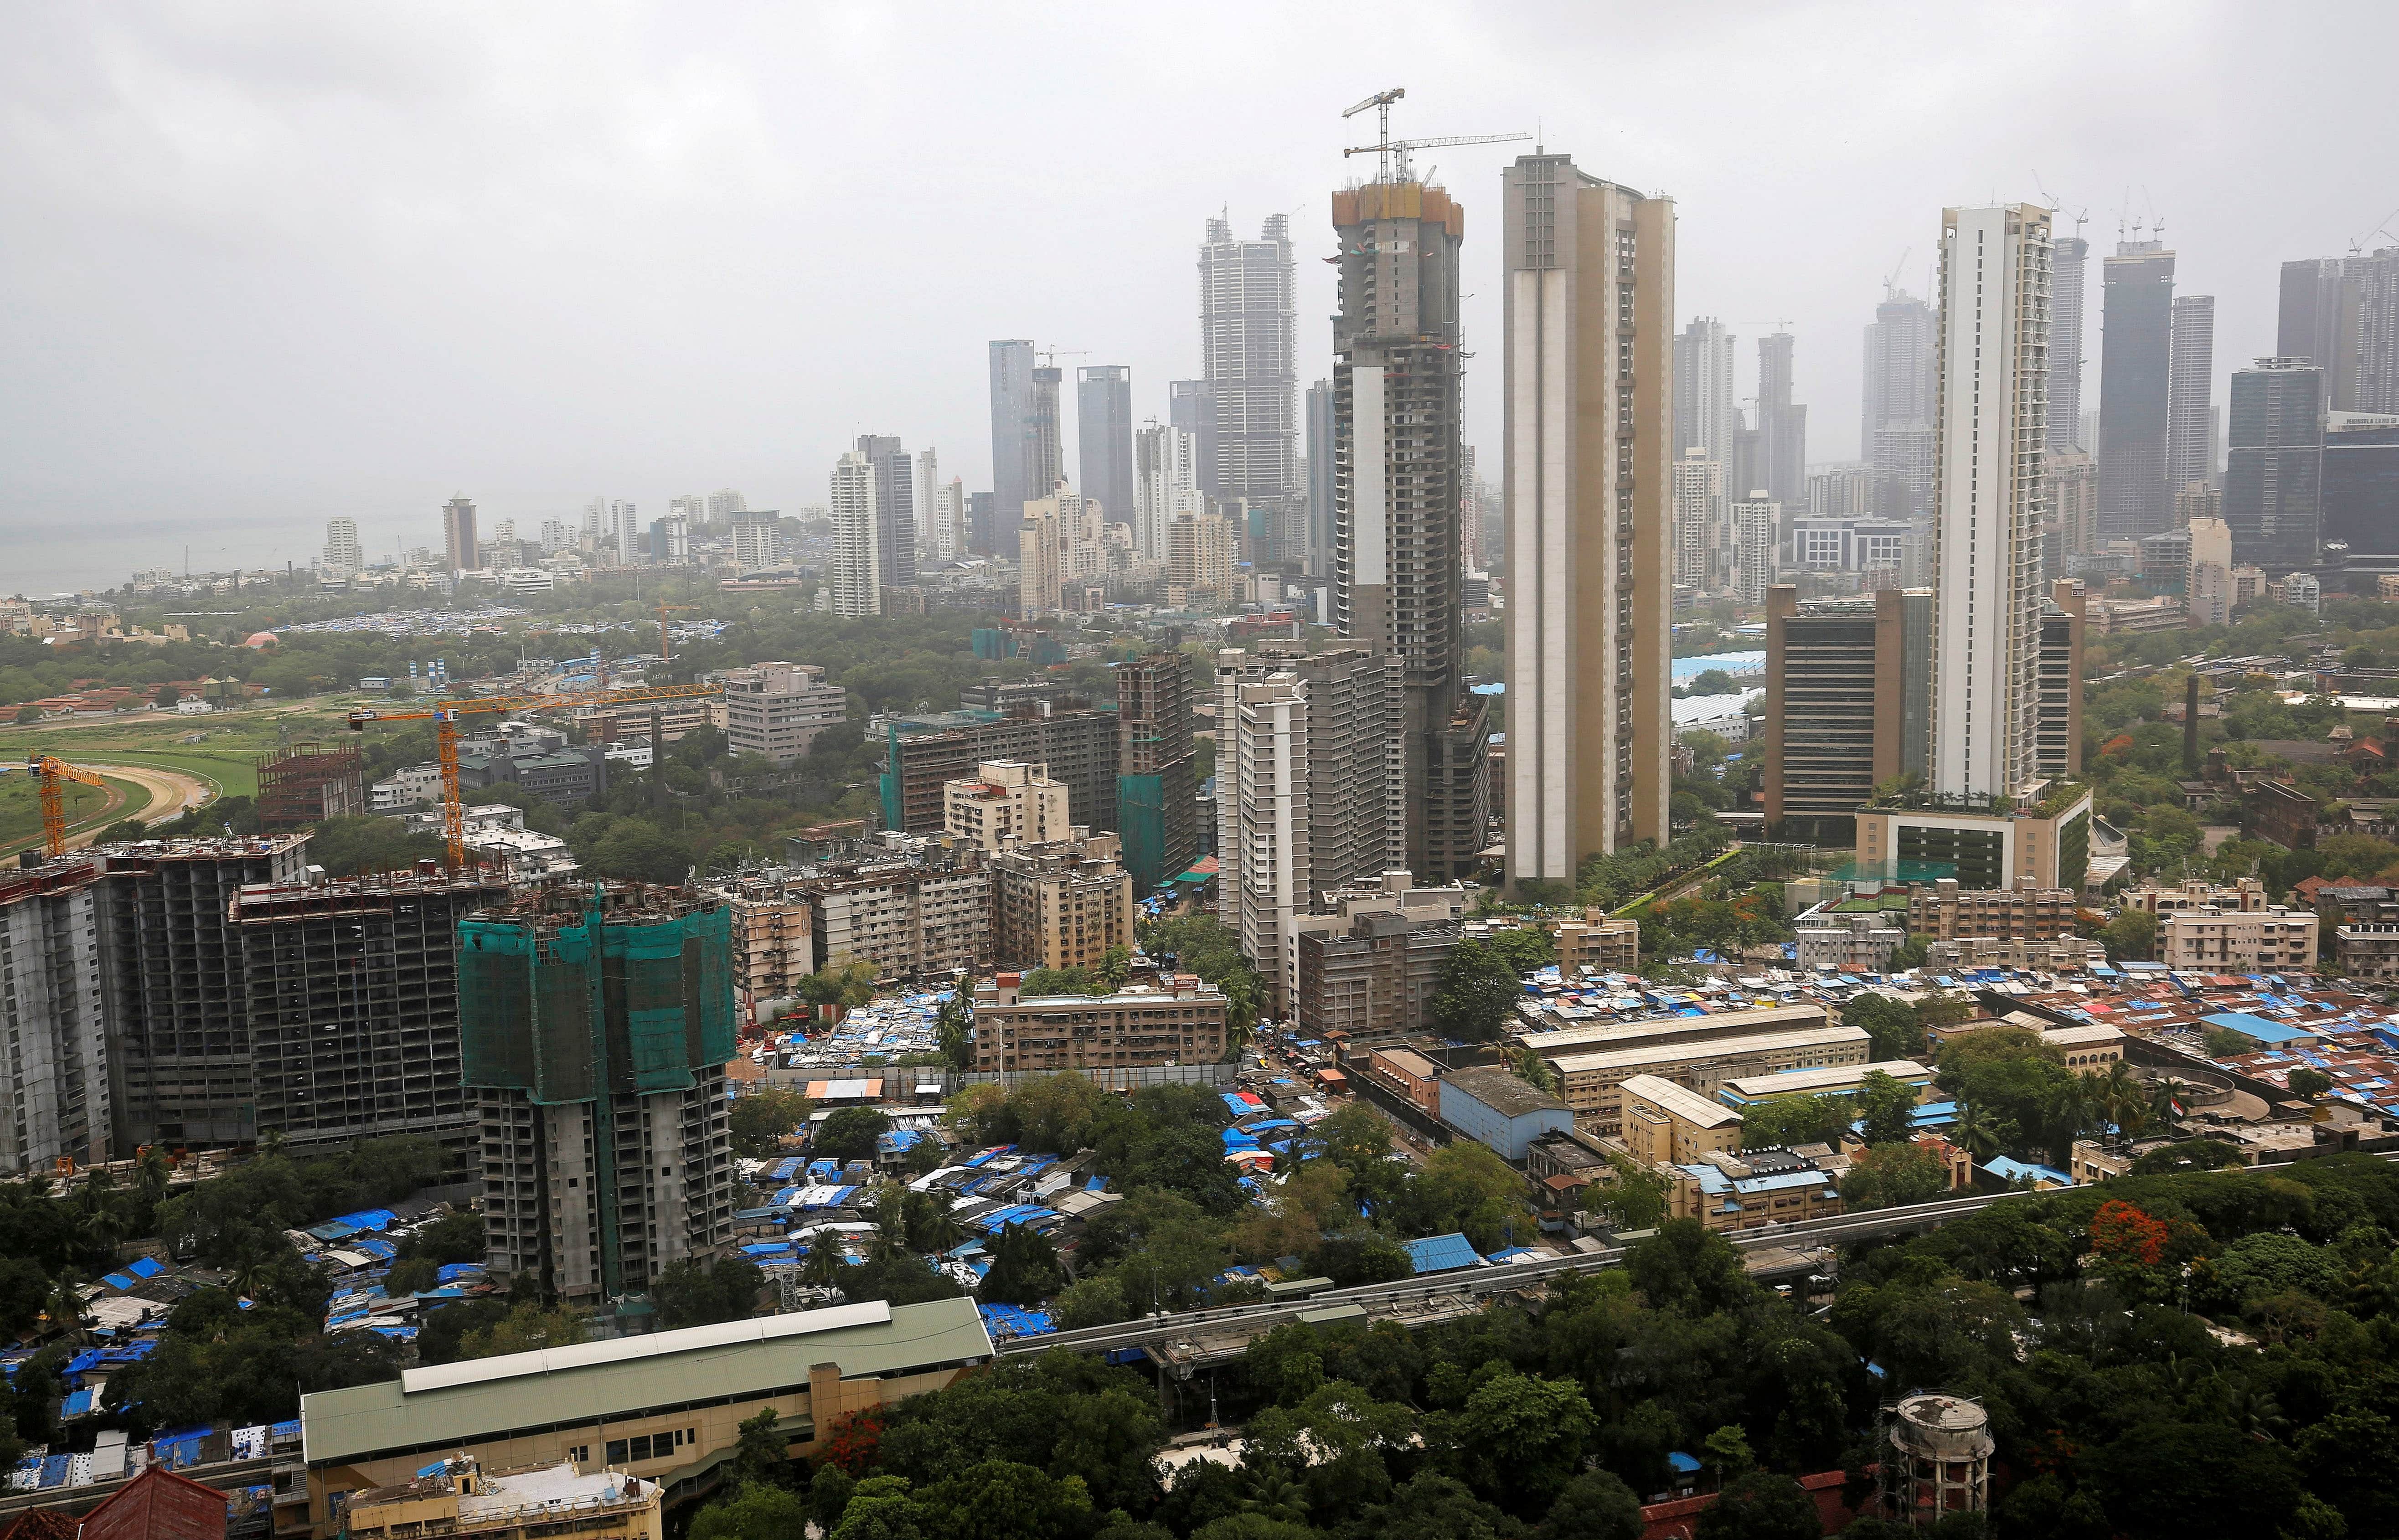 Mumbai's skyline. (Credit: Reuters Photo)